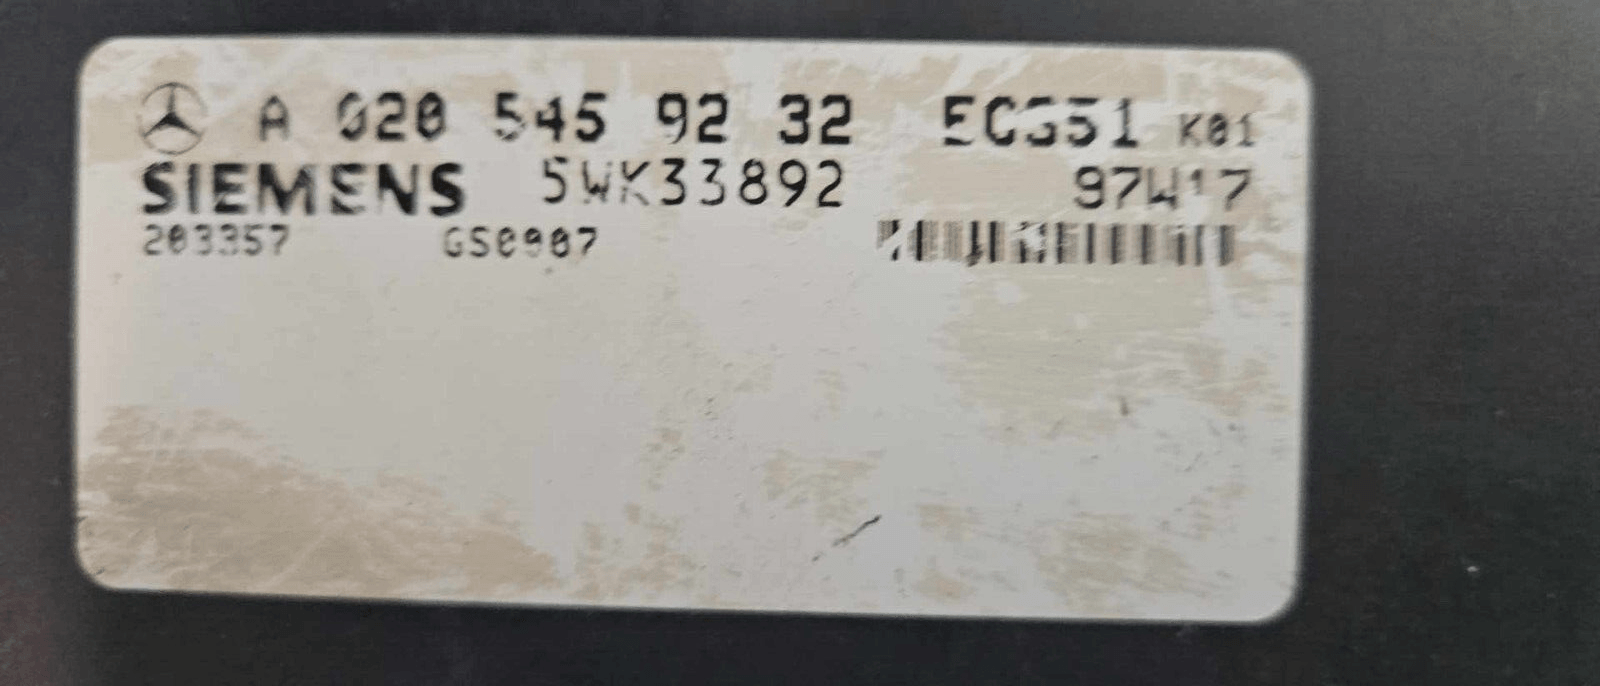 A 020 545 92 32 Mercedes E320 1997-1999 TCM Transmission Computer - Swan Auto